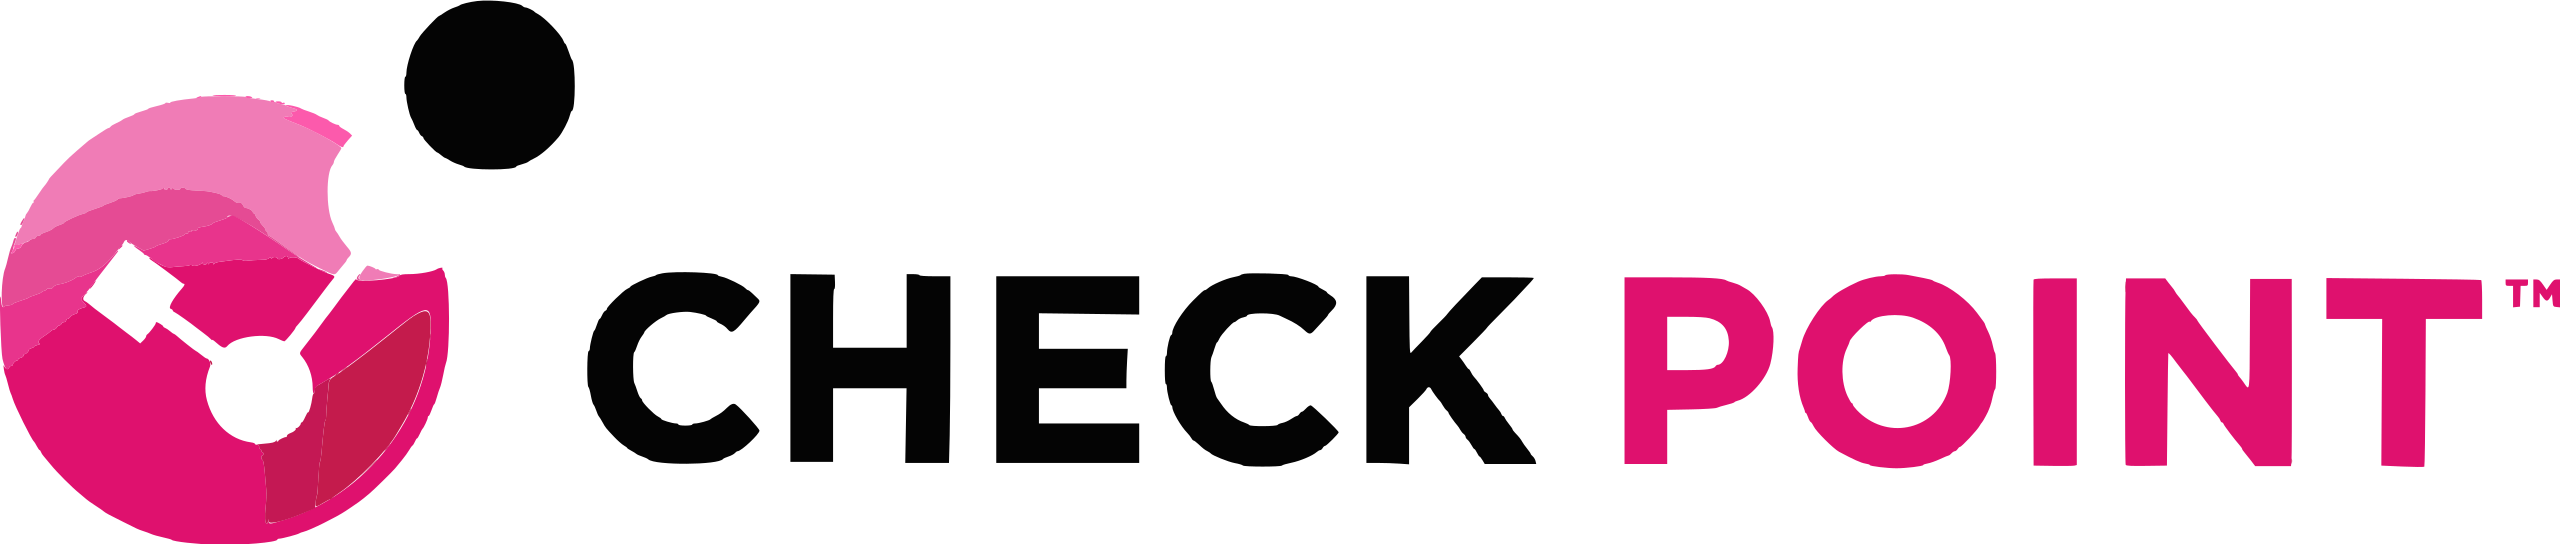 Check_Point_logo